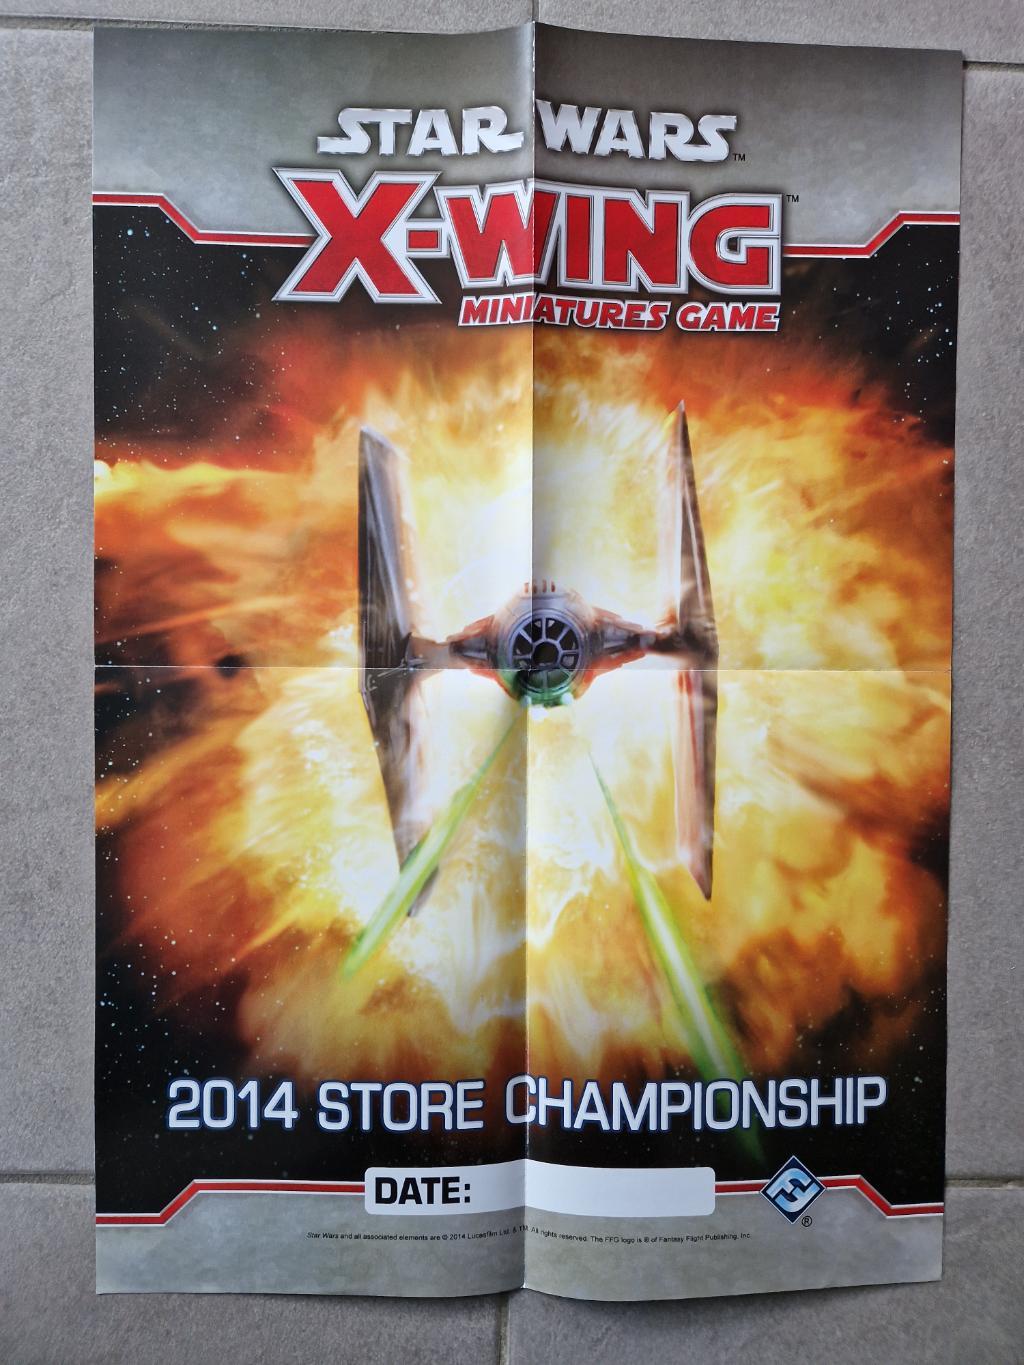 X-wing 1.0 - Le Jeu De Figurines - Affiche Star Wars Tie Fighter - 2014 Store Championship